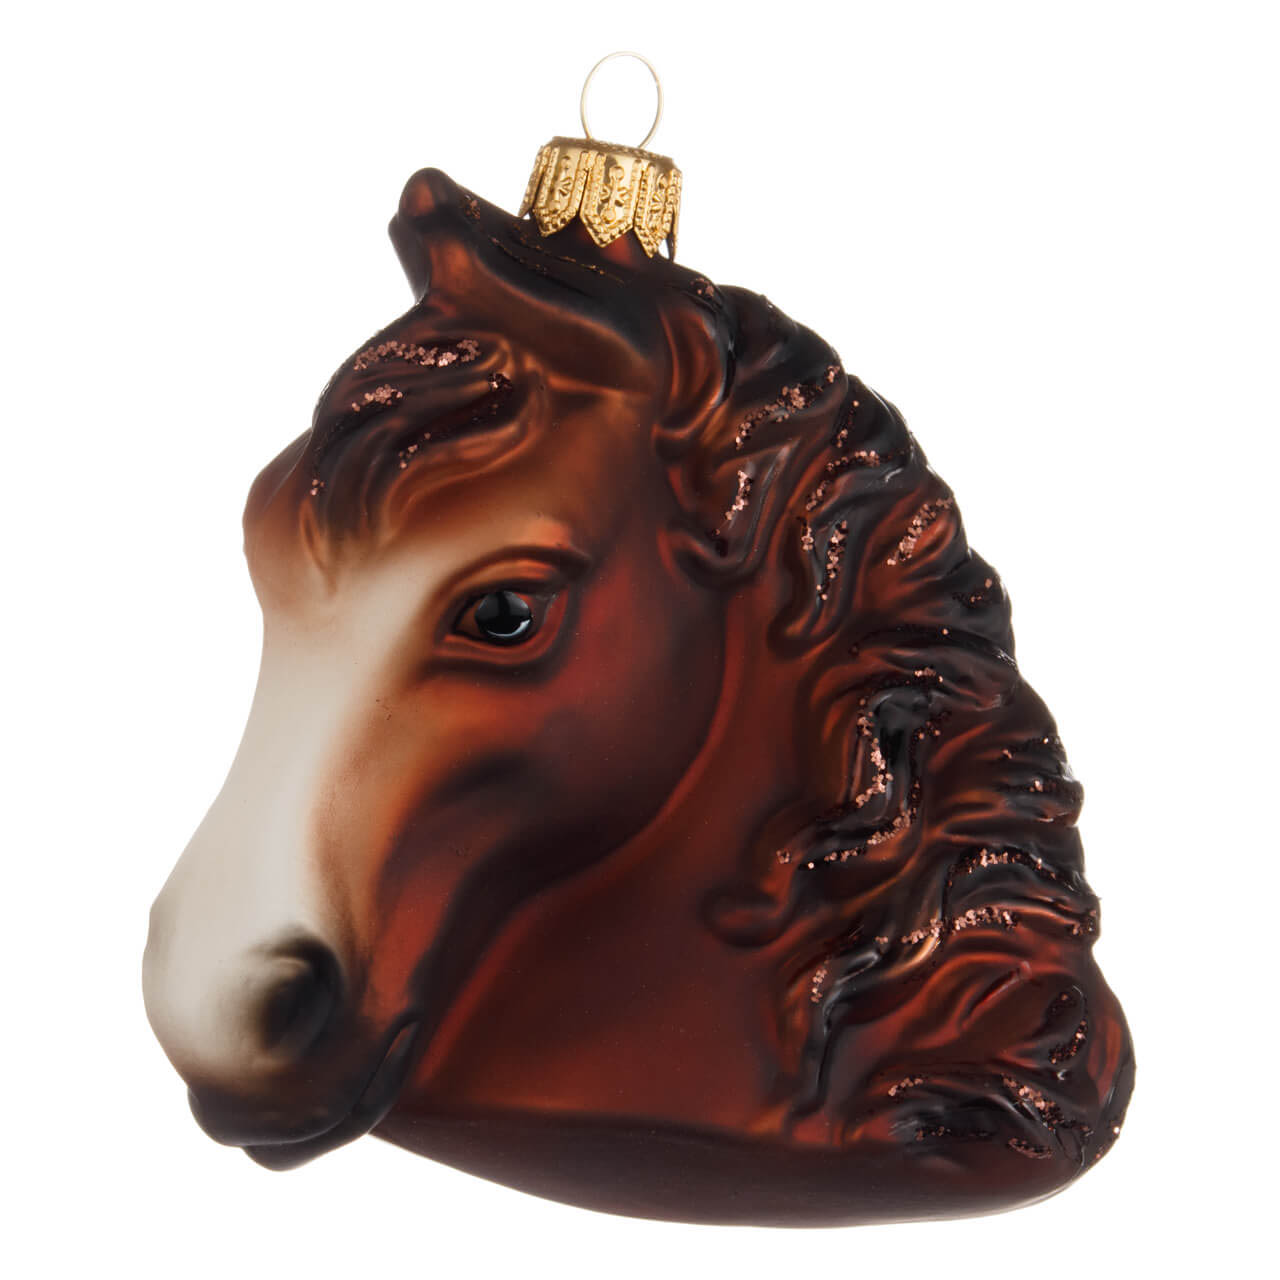 Horse head